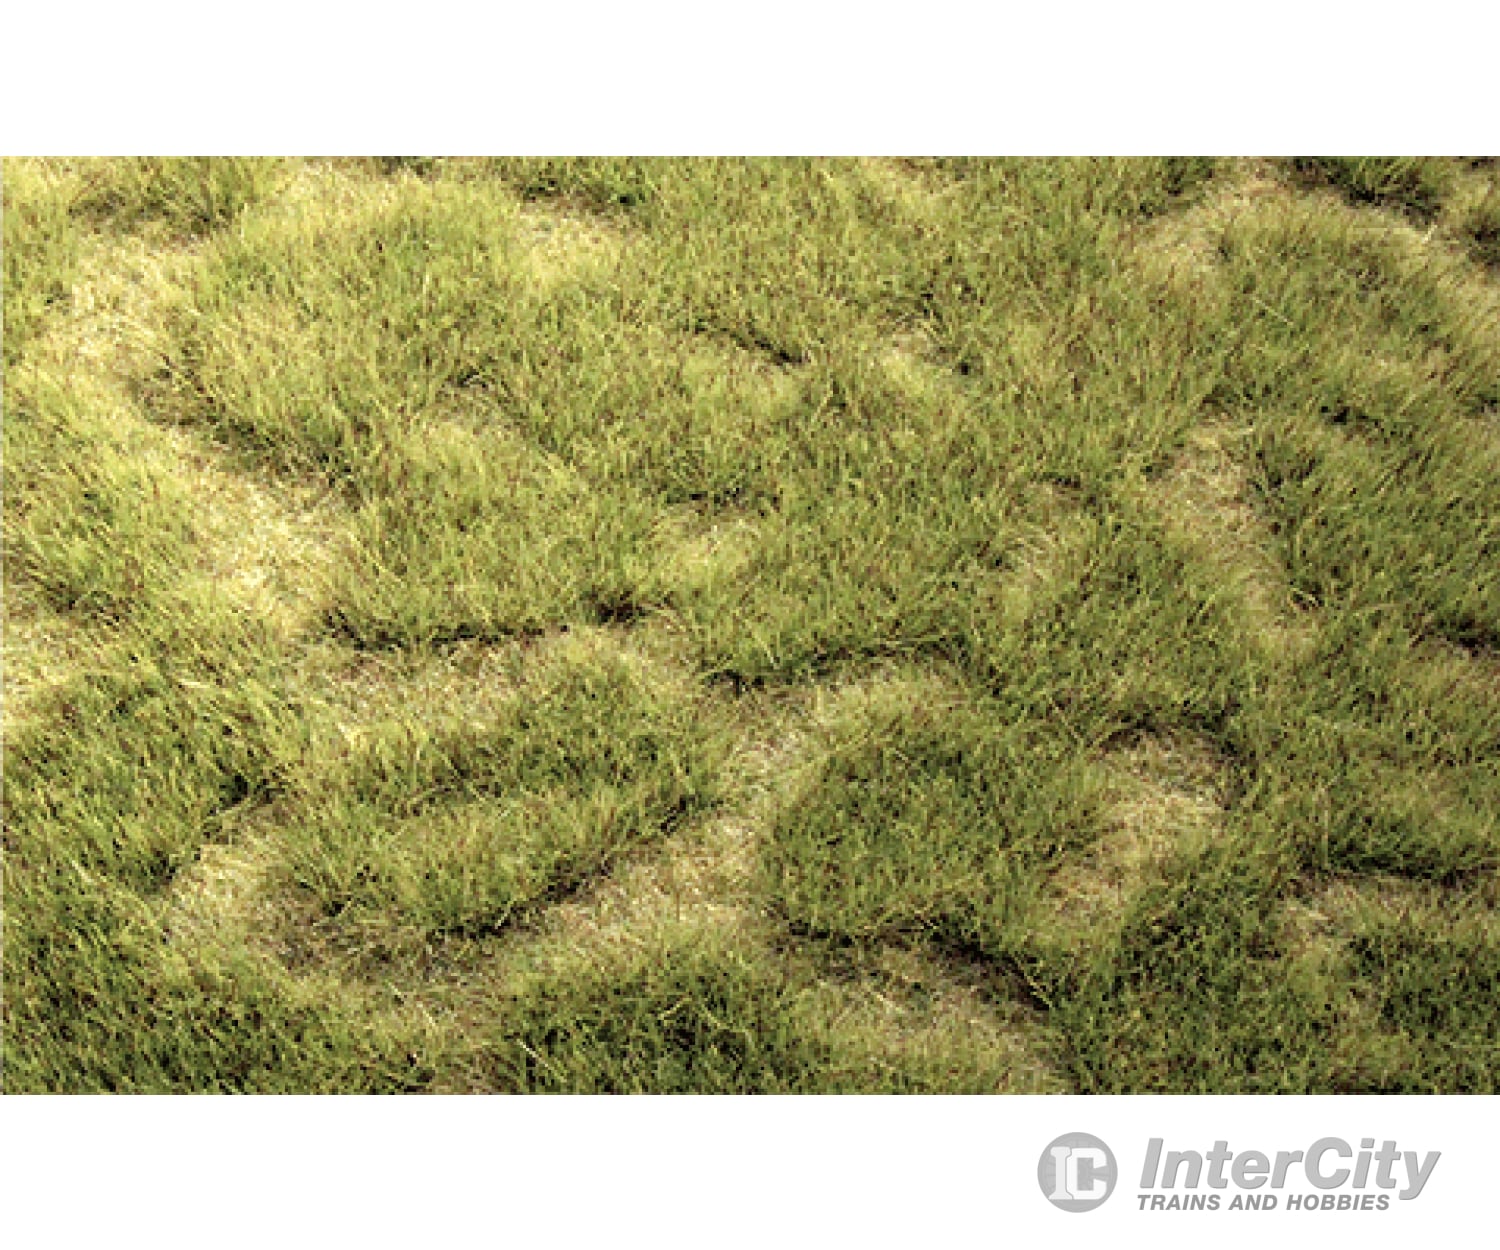 Heki 1841 Tuftgrass(R) Pad - 17-1/2 X 6-1/2 44.5 16.5Cm -- Spring Grass & Scenery Mats